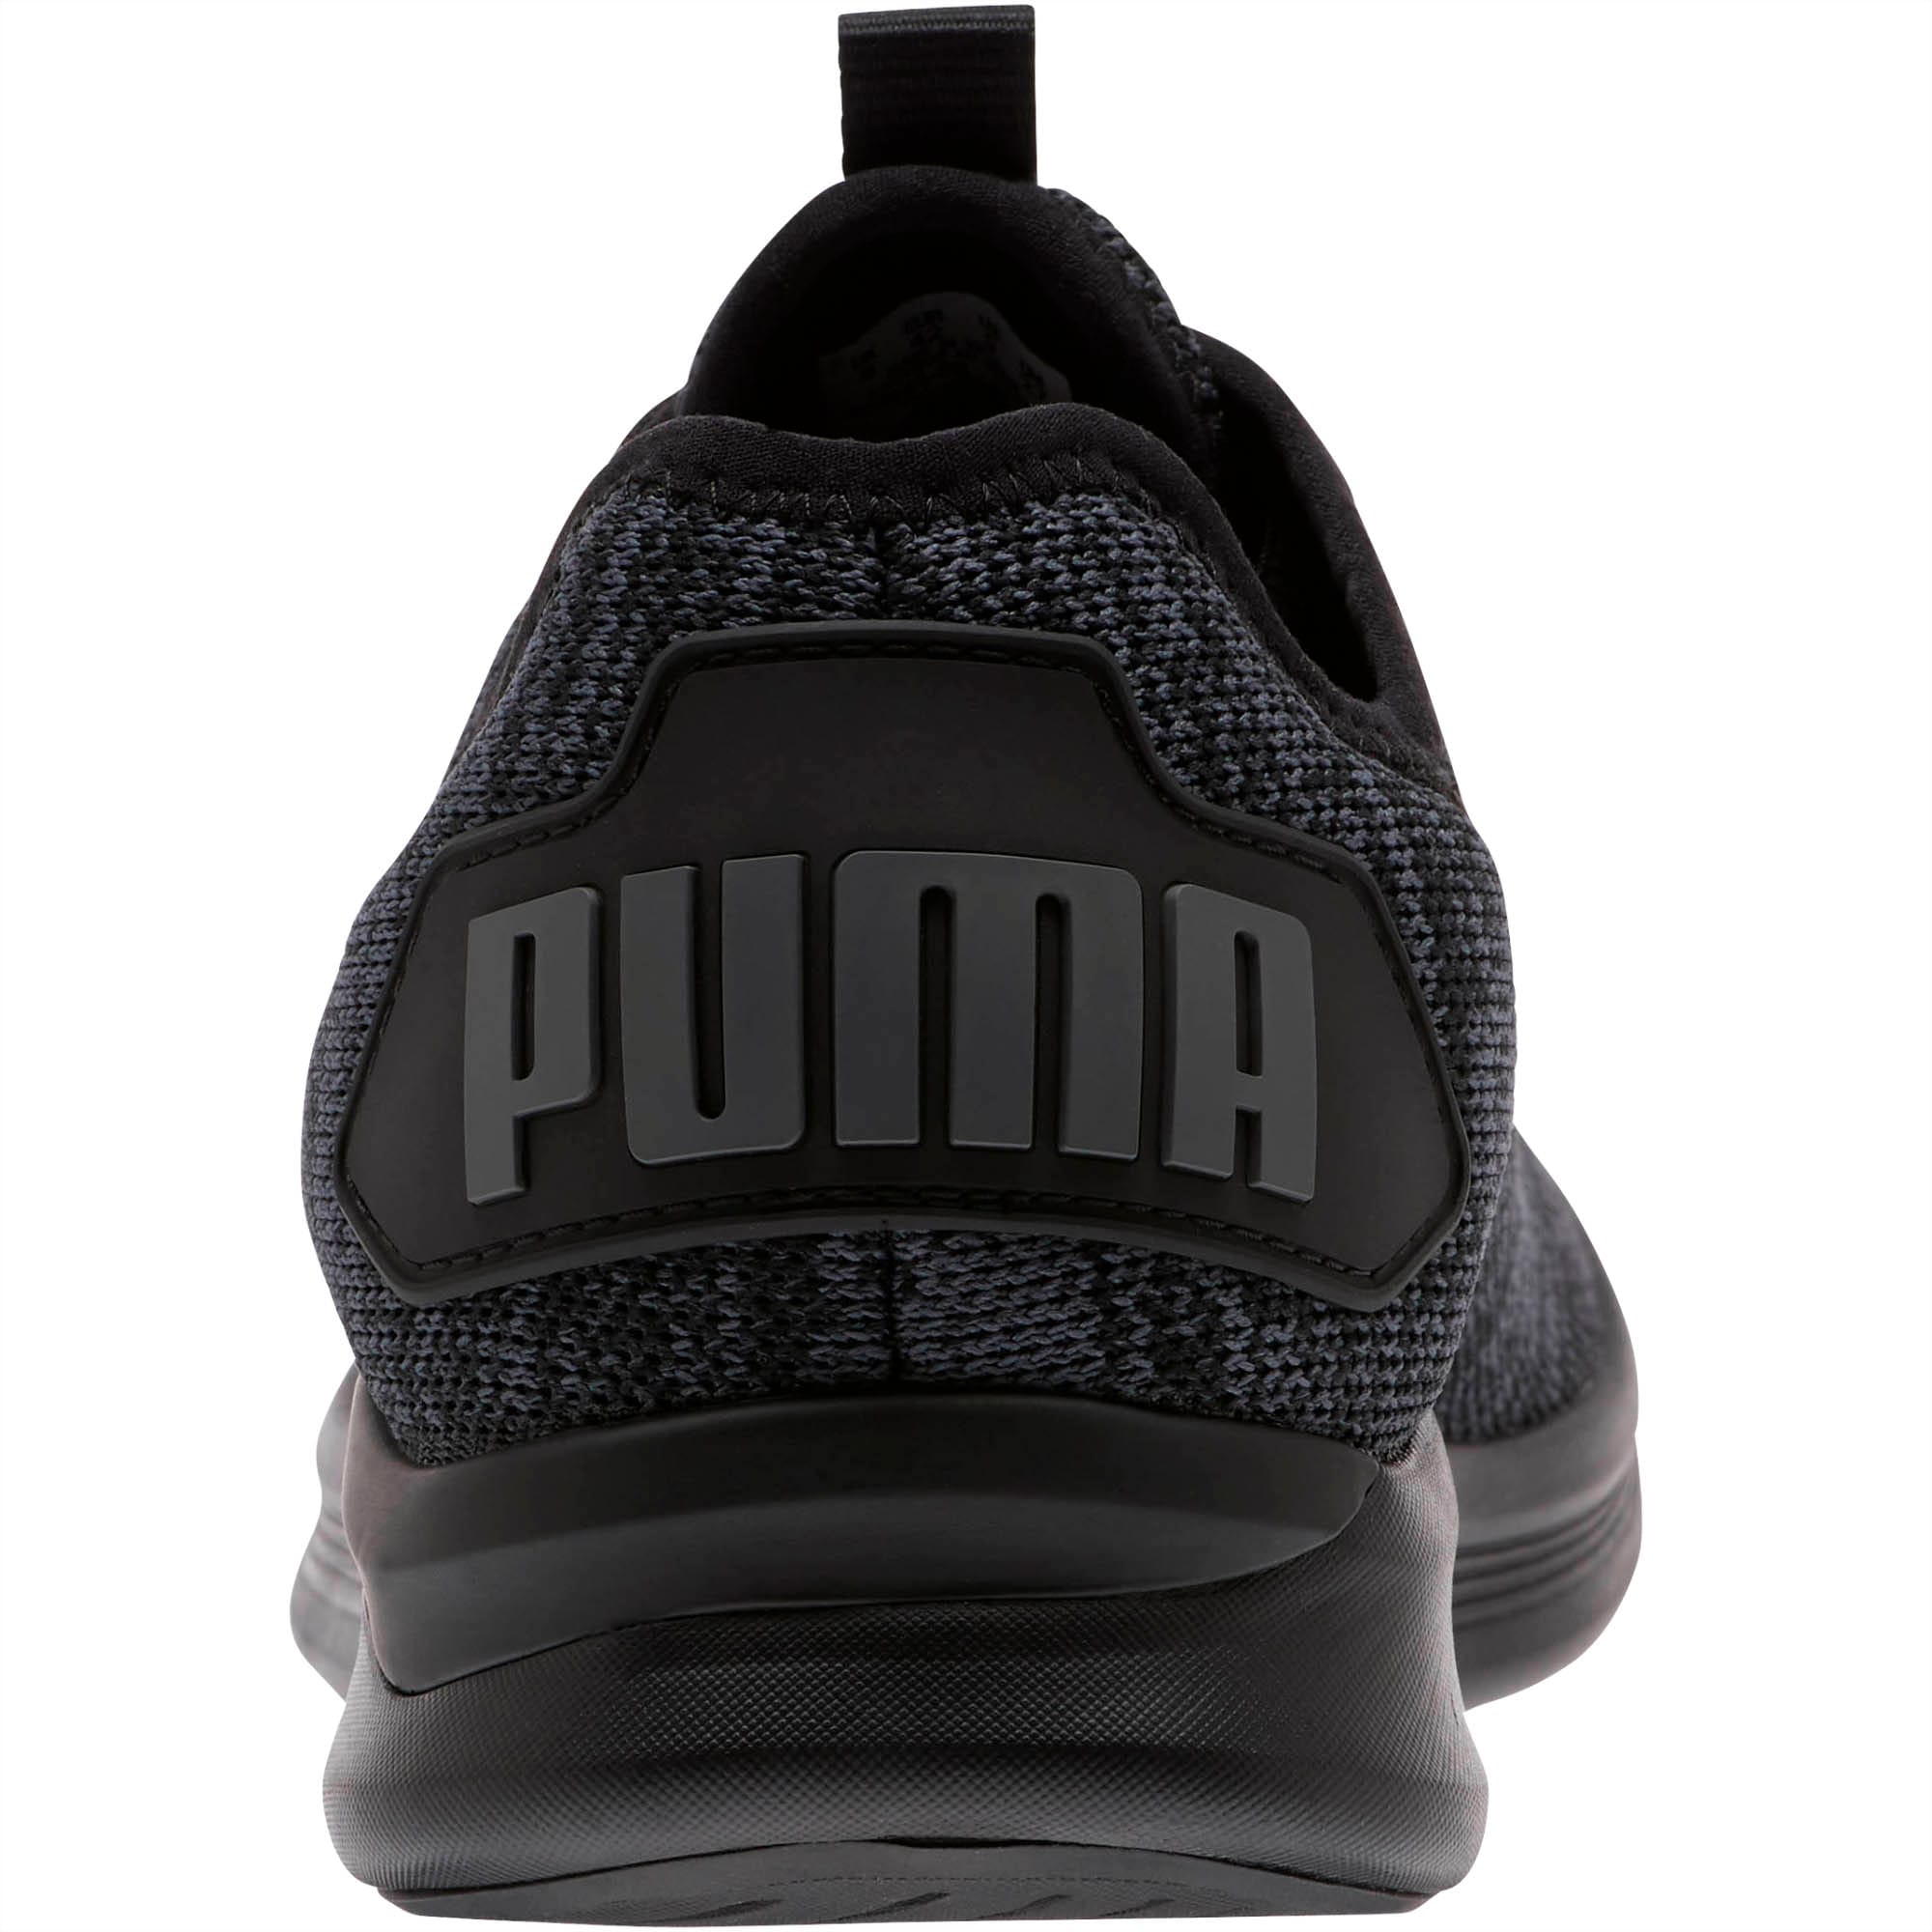 puma ballast men's running shoes